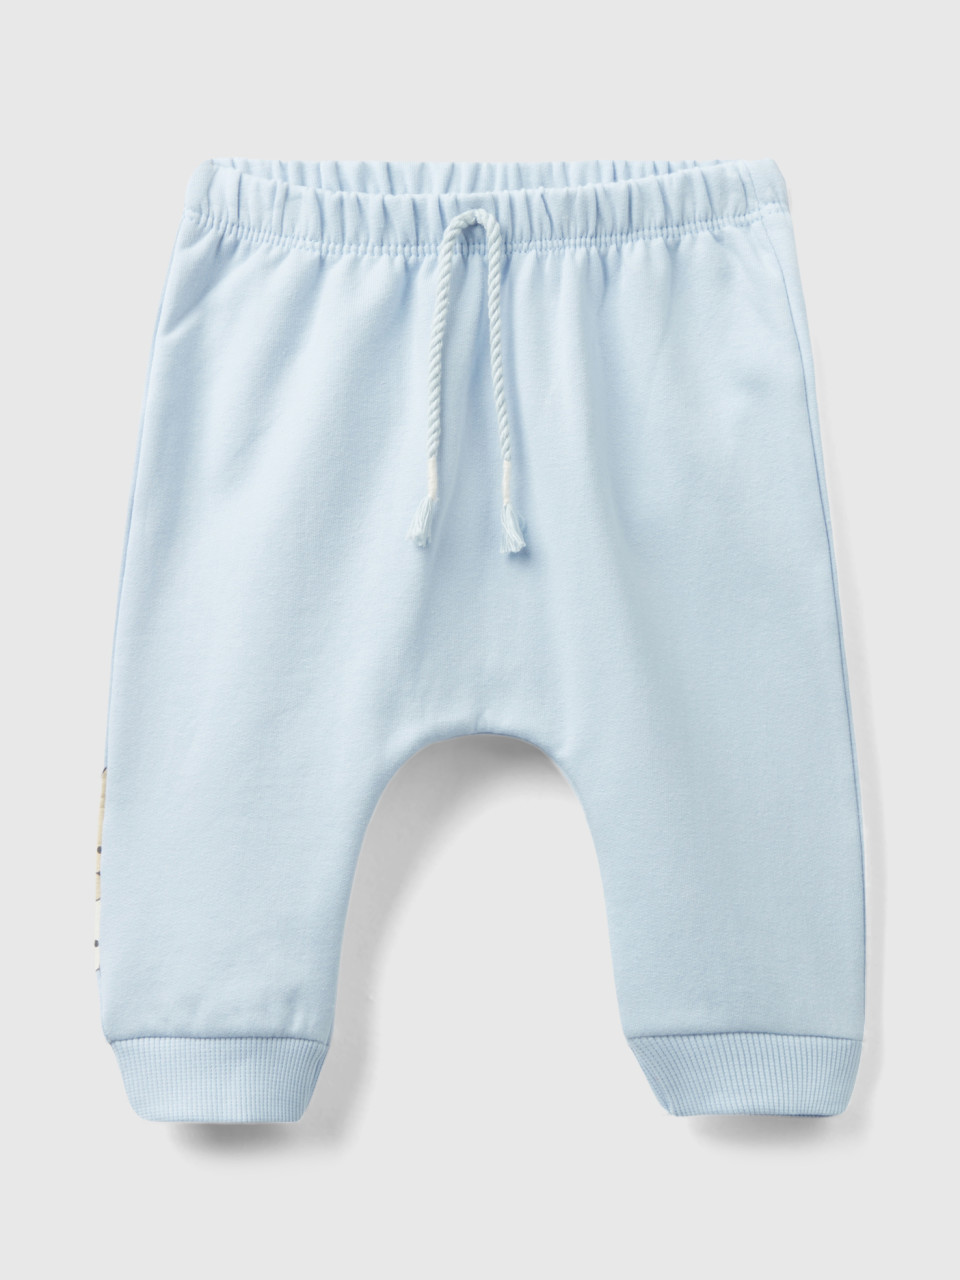 Benetton, Warm Sweat Trousers With Pocket, Sky Blue, Kids